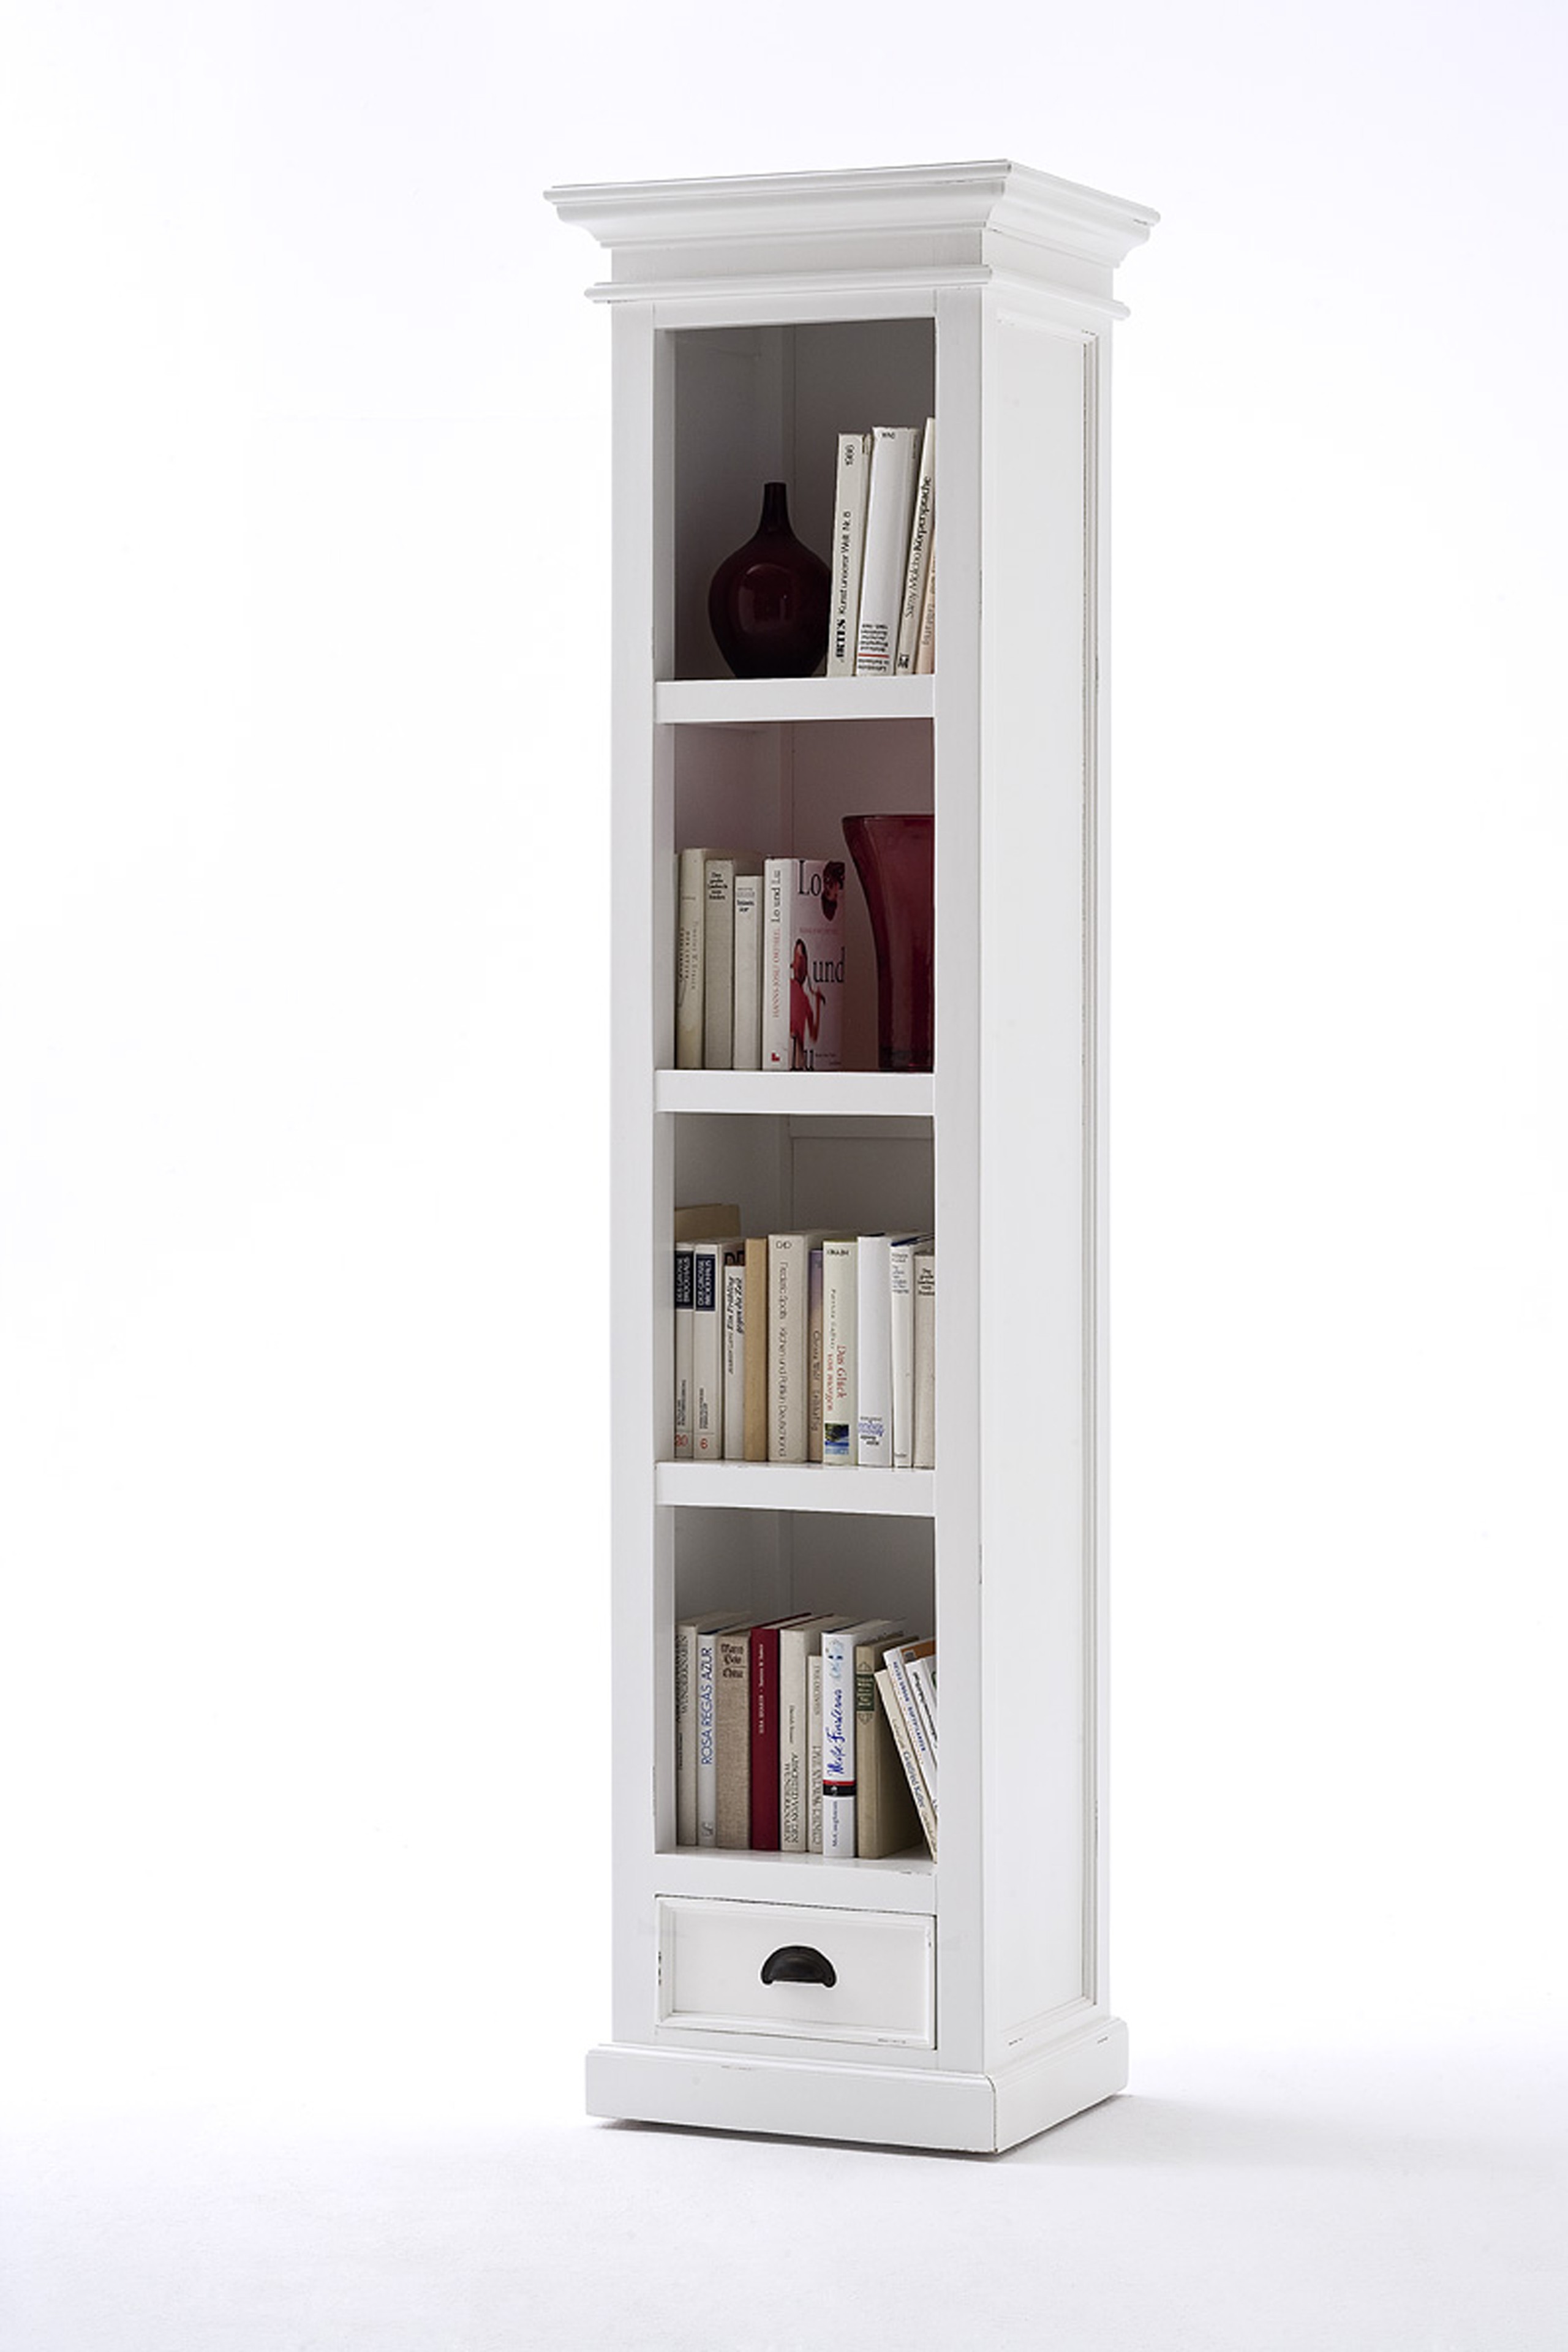 Tall narrow bookshelves